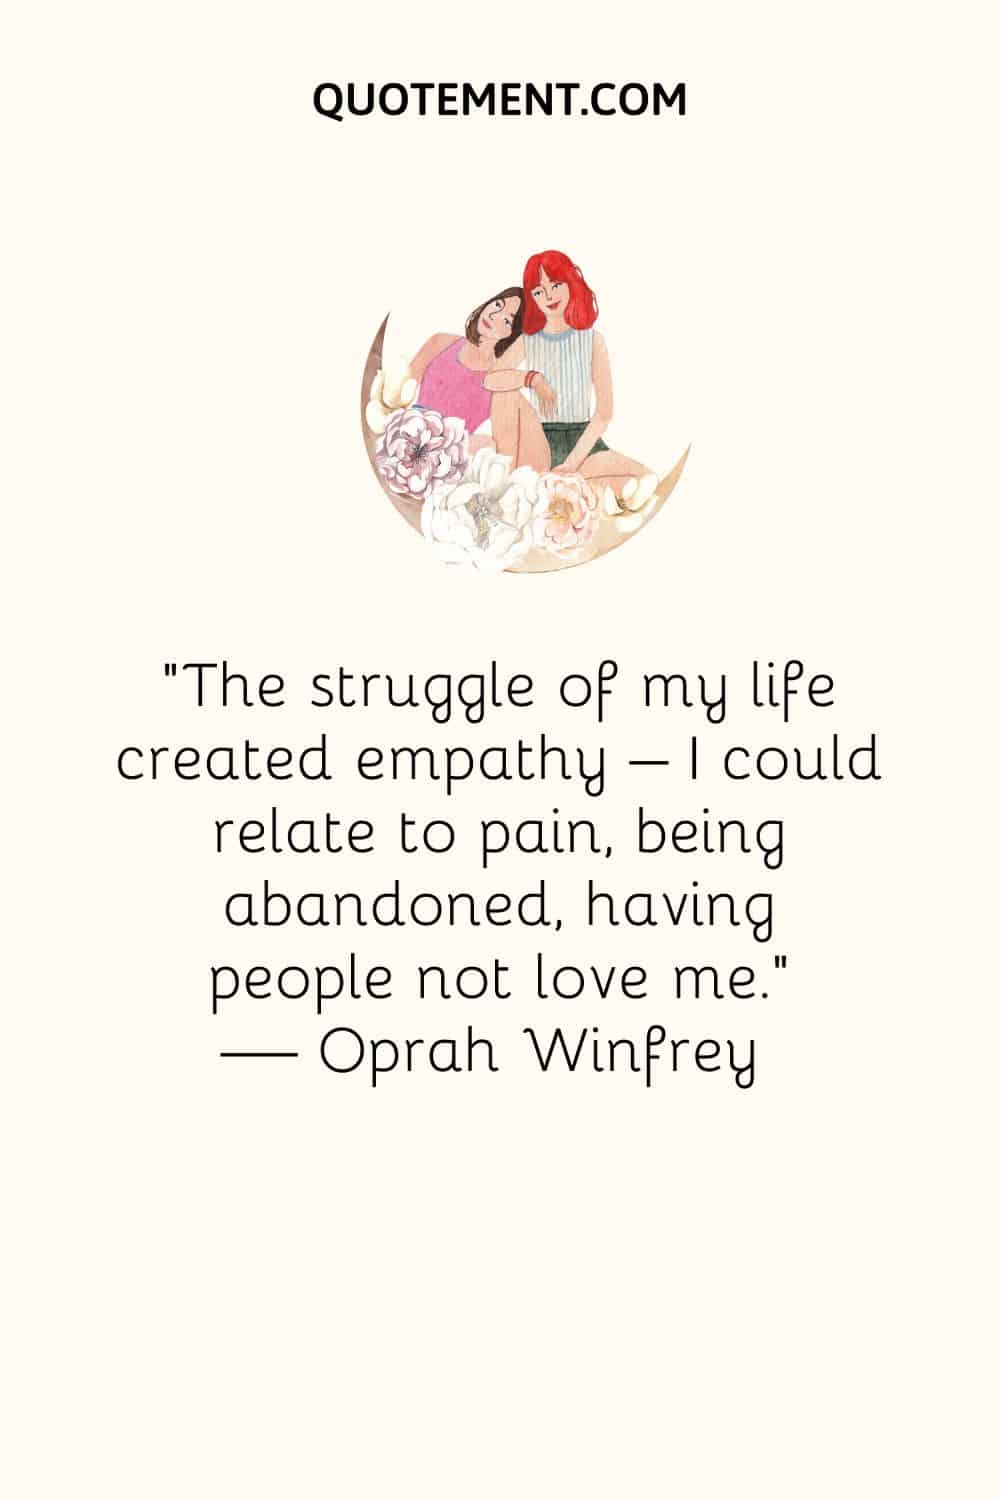 The struggle of my life created empathy